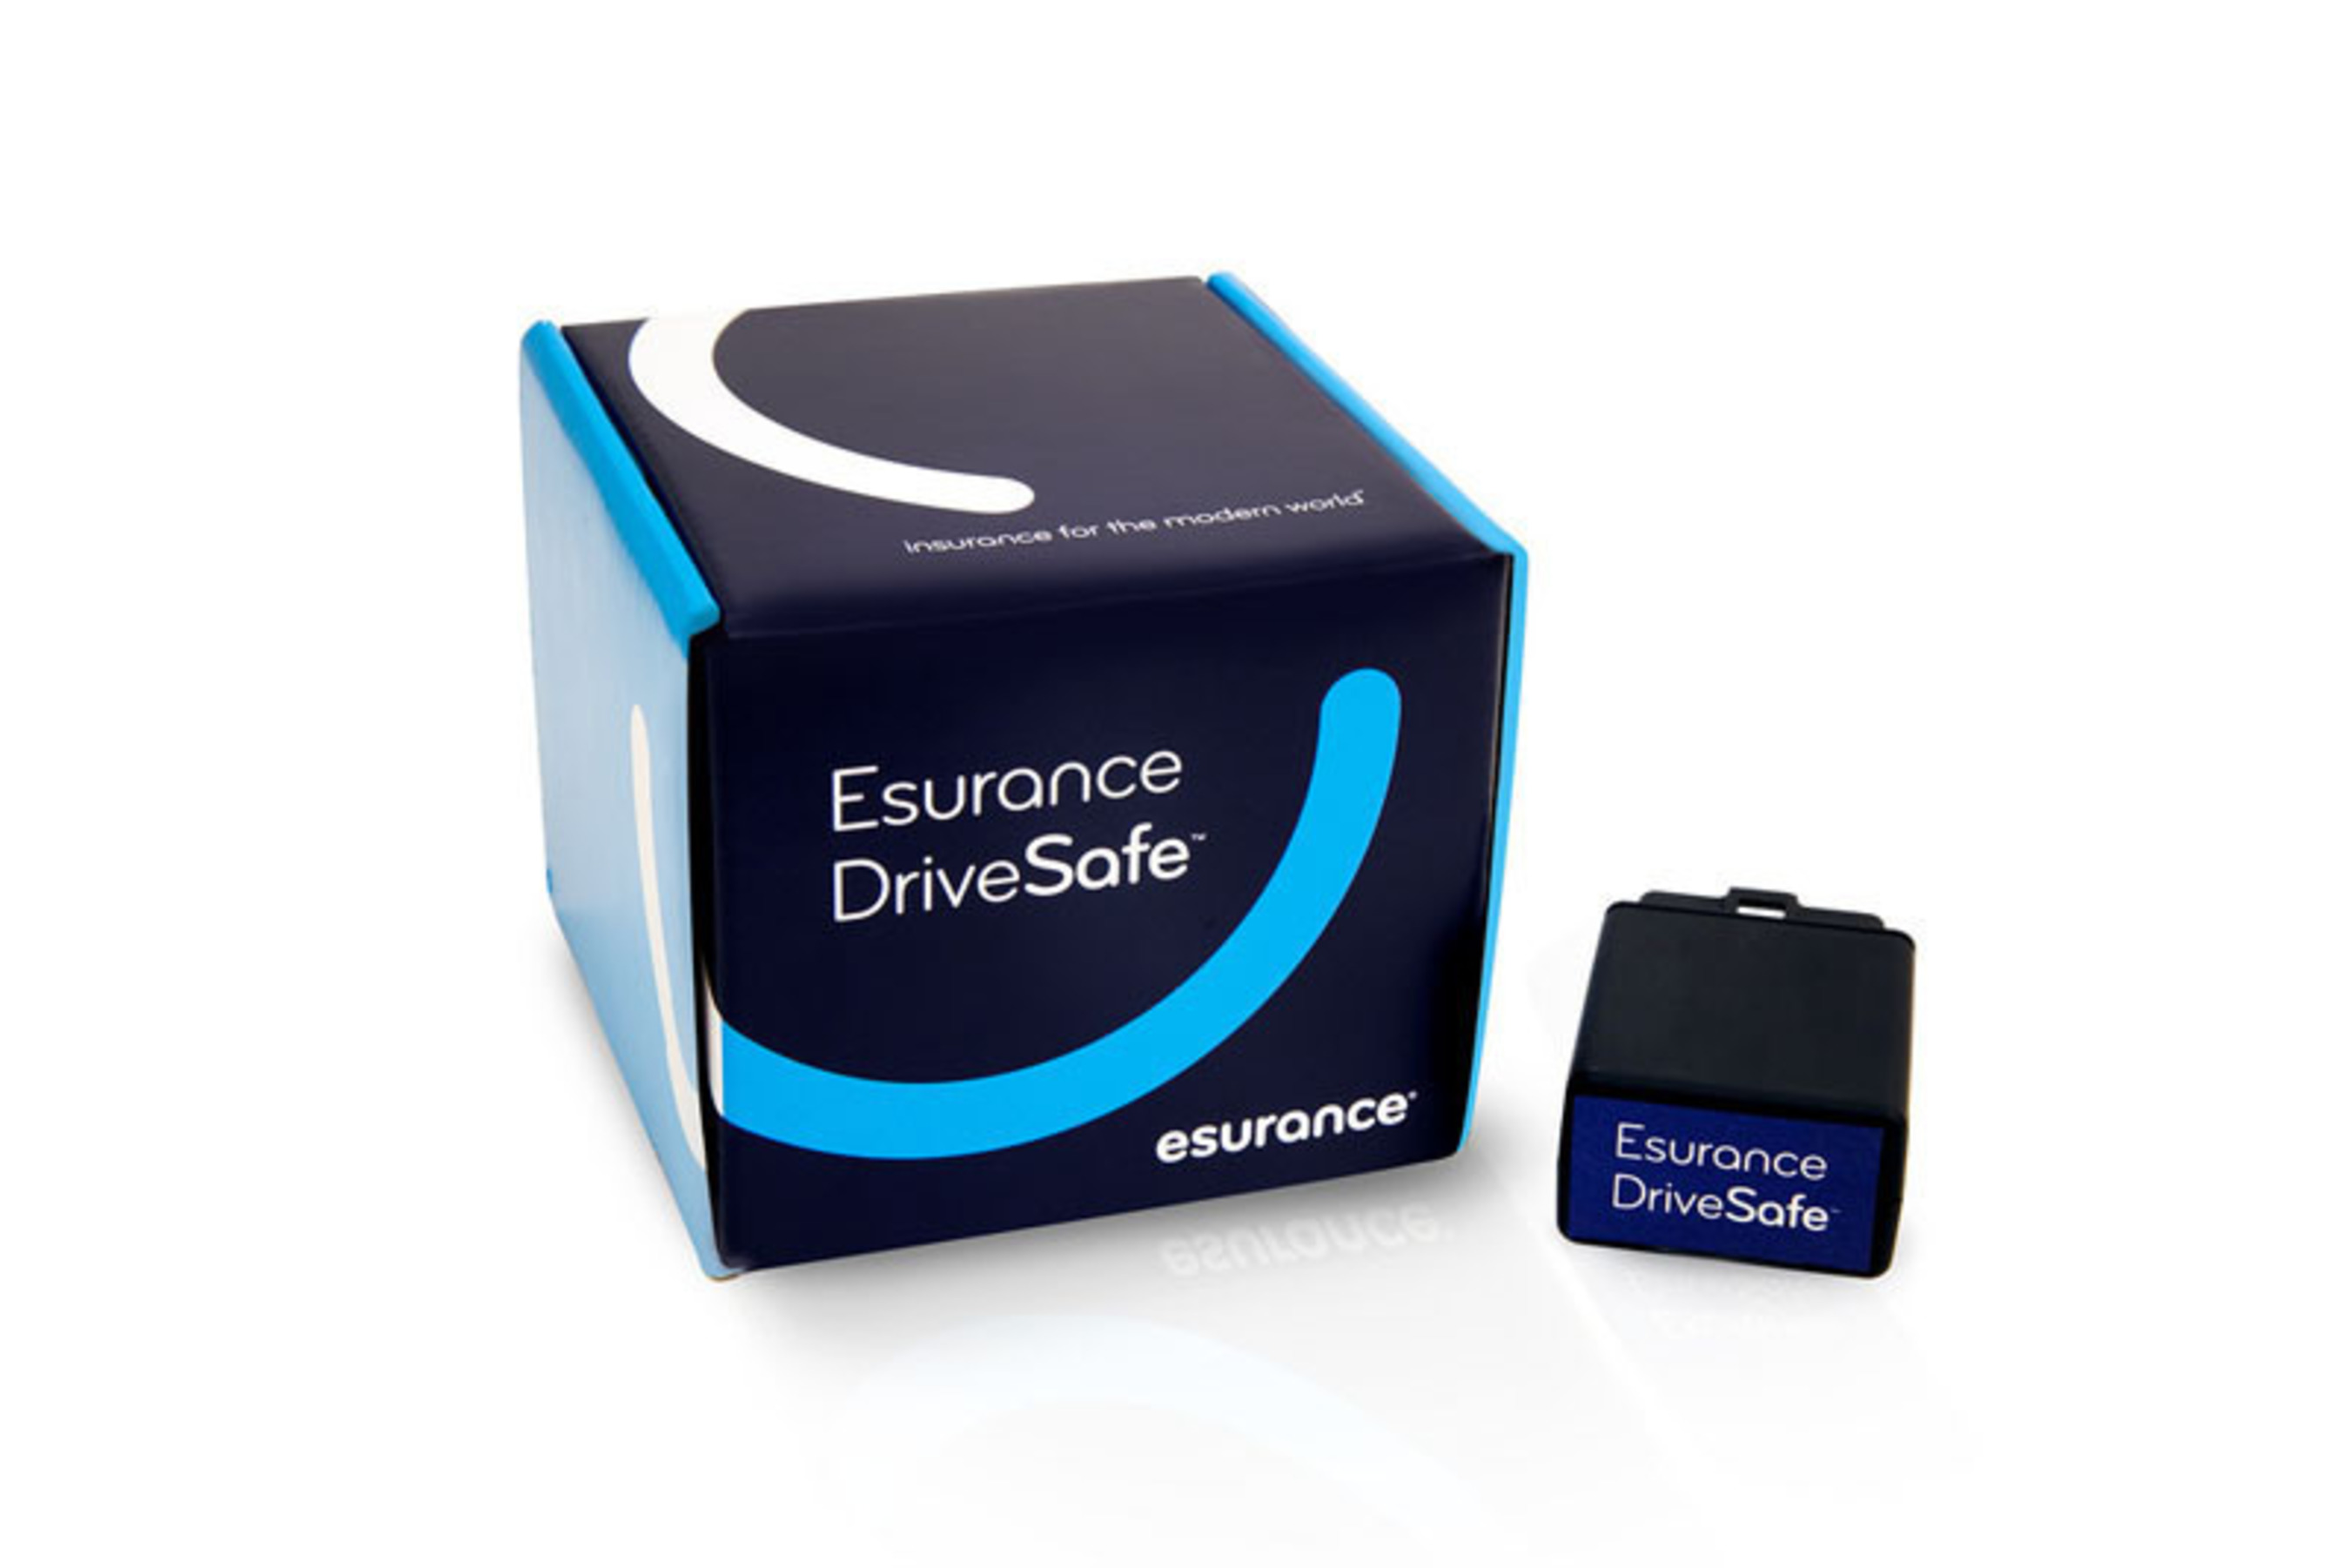 Esurance DriveSafe packaging. (PRNewsFoto/Esurance) (PRNewsFoto/ESURANCE)